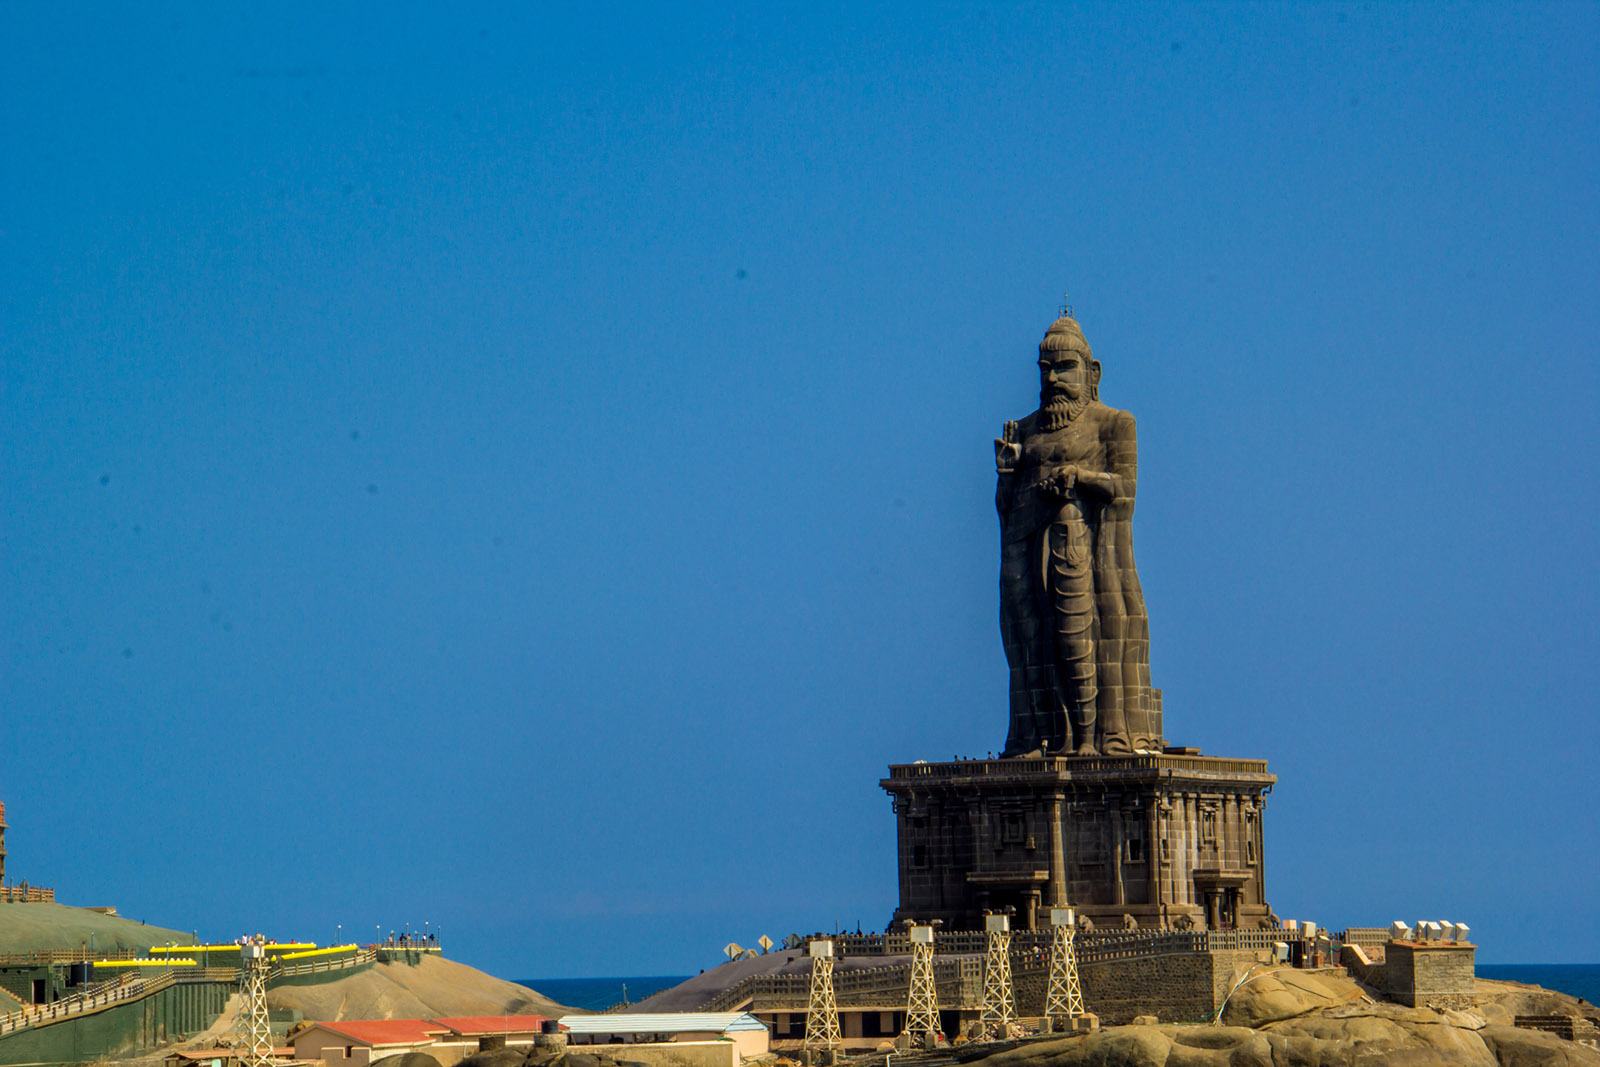 A statue of the Tamil poet Tiruvalluvar, India